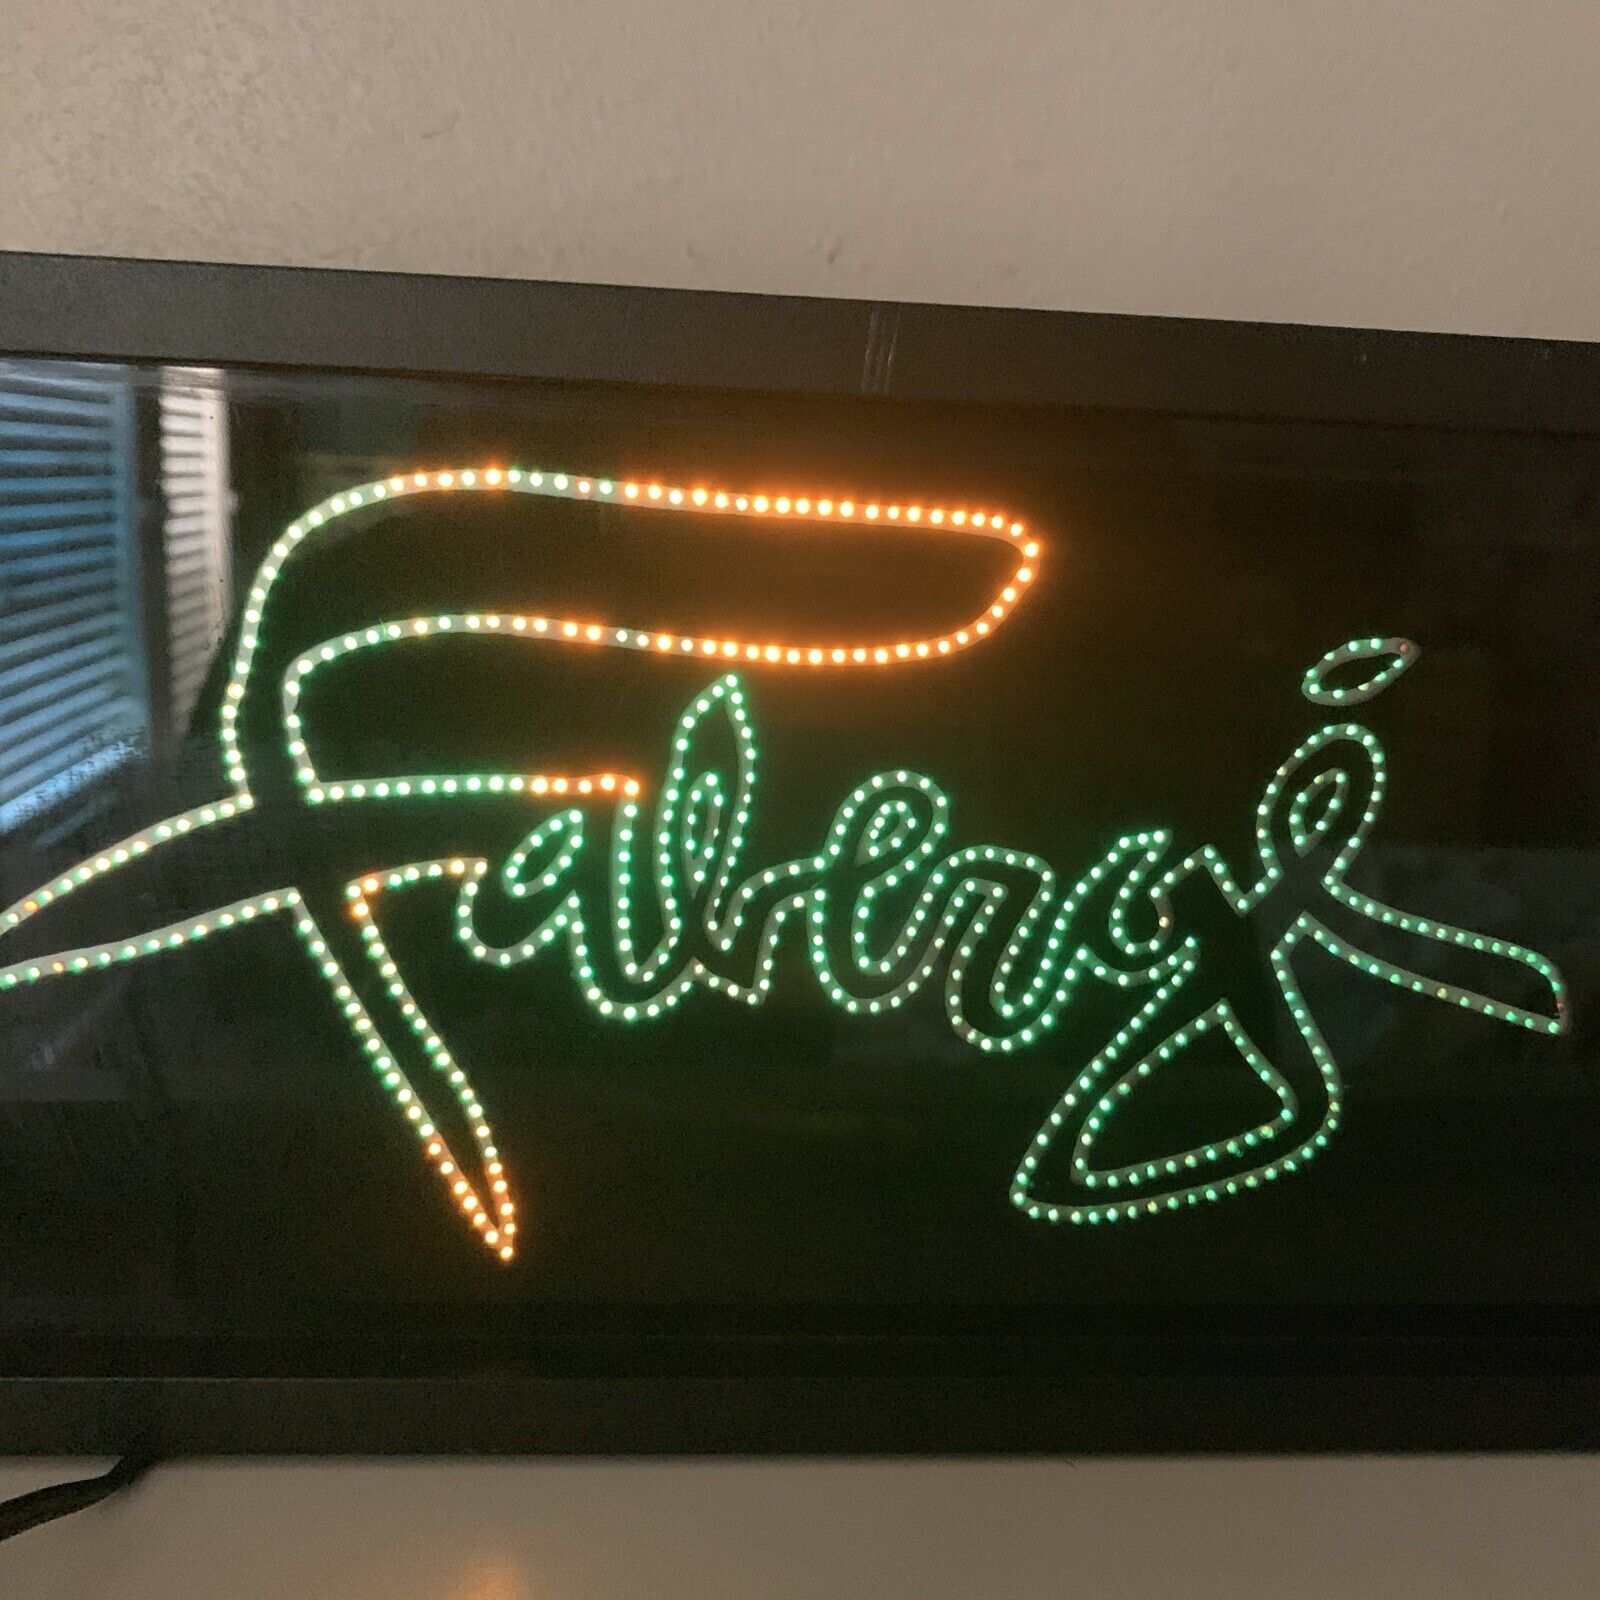 Faberge fiber optic light installation Corded